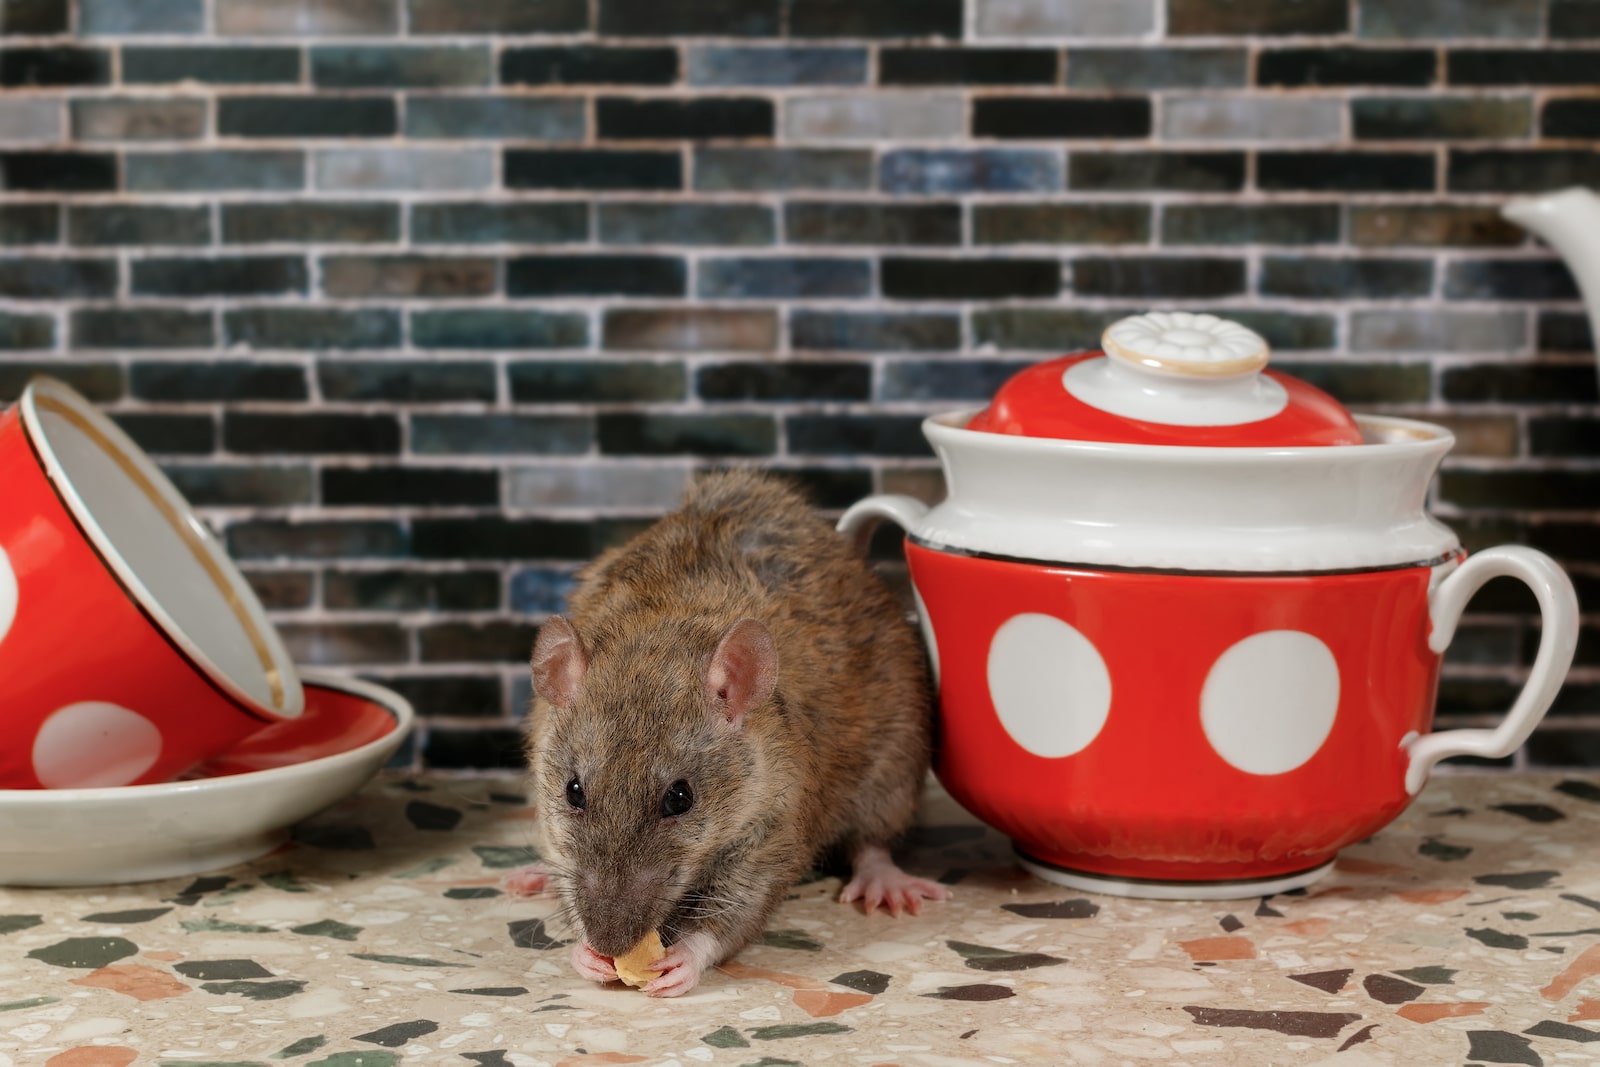 https://lawncareextraordinaire.com/wp-content/uploads/2022/01/mice-poop-on-counter.jpg